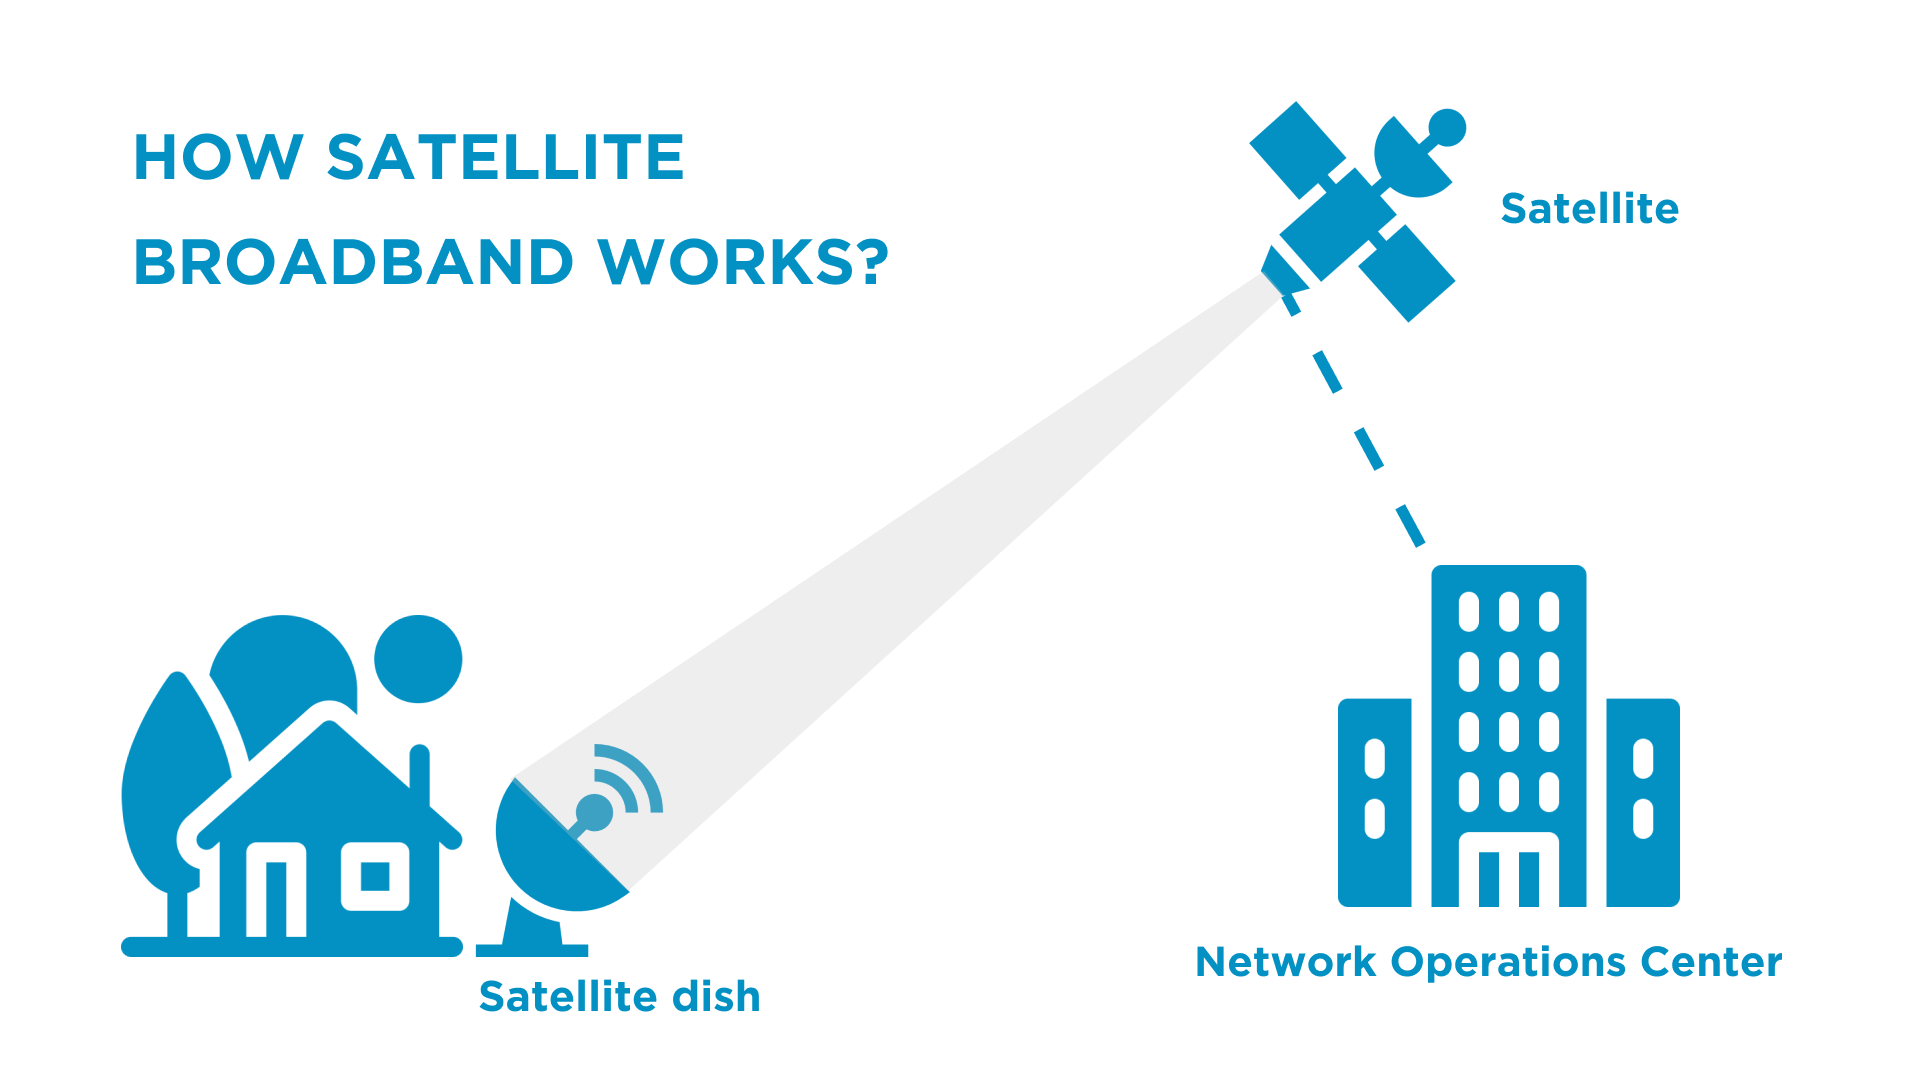 Satellite broadband